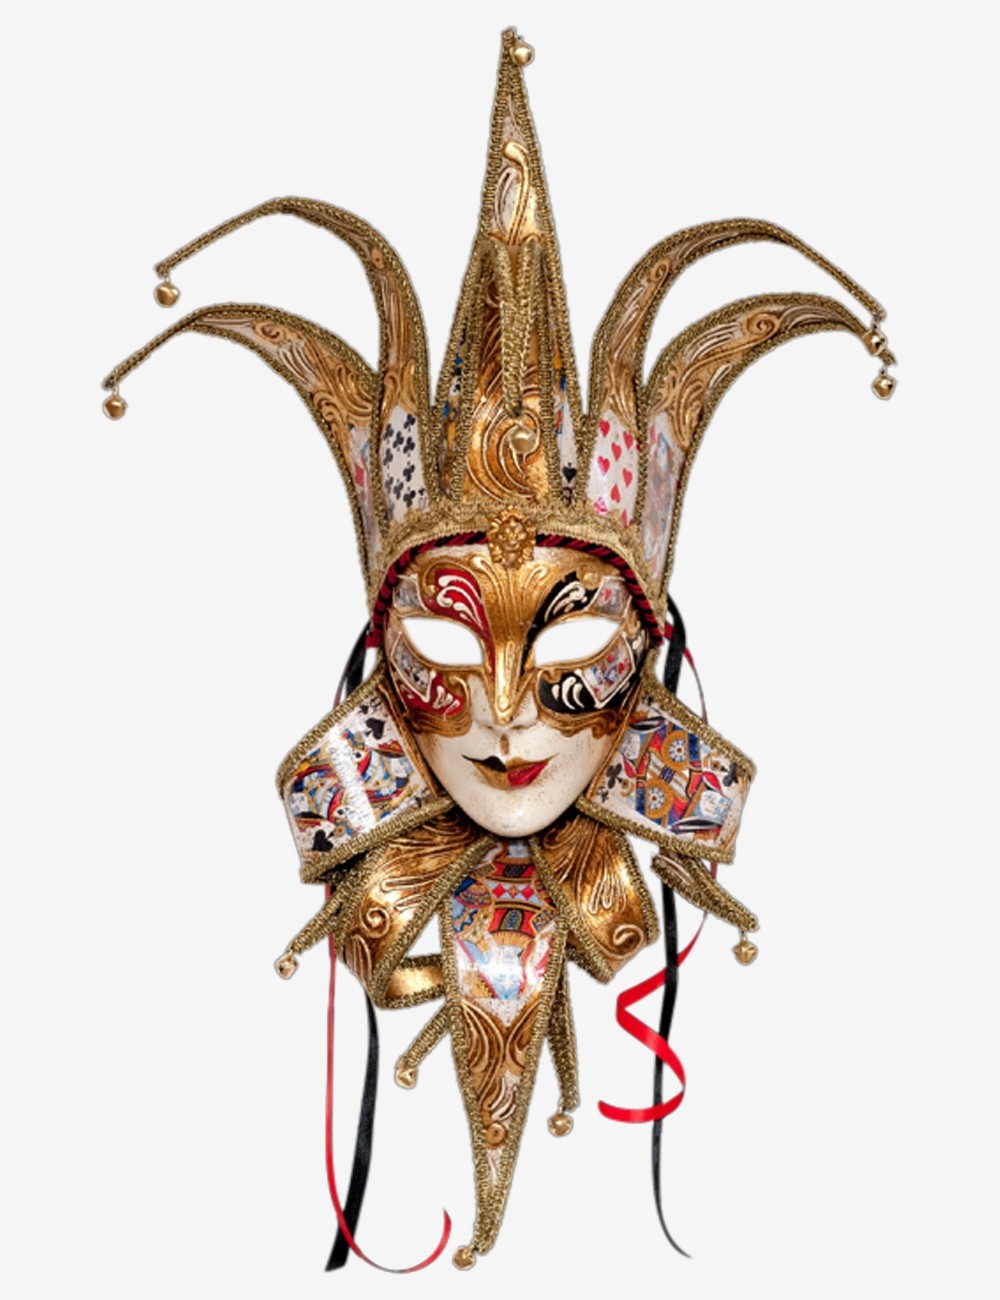 Alea Jolly - Jester Mask handcrafted in Venice